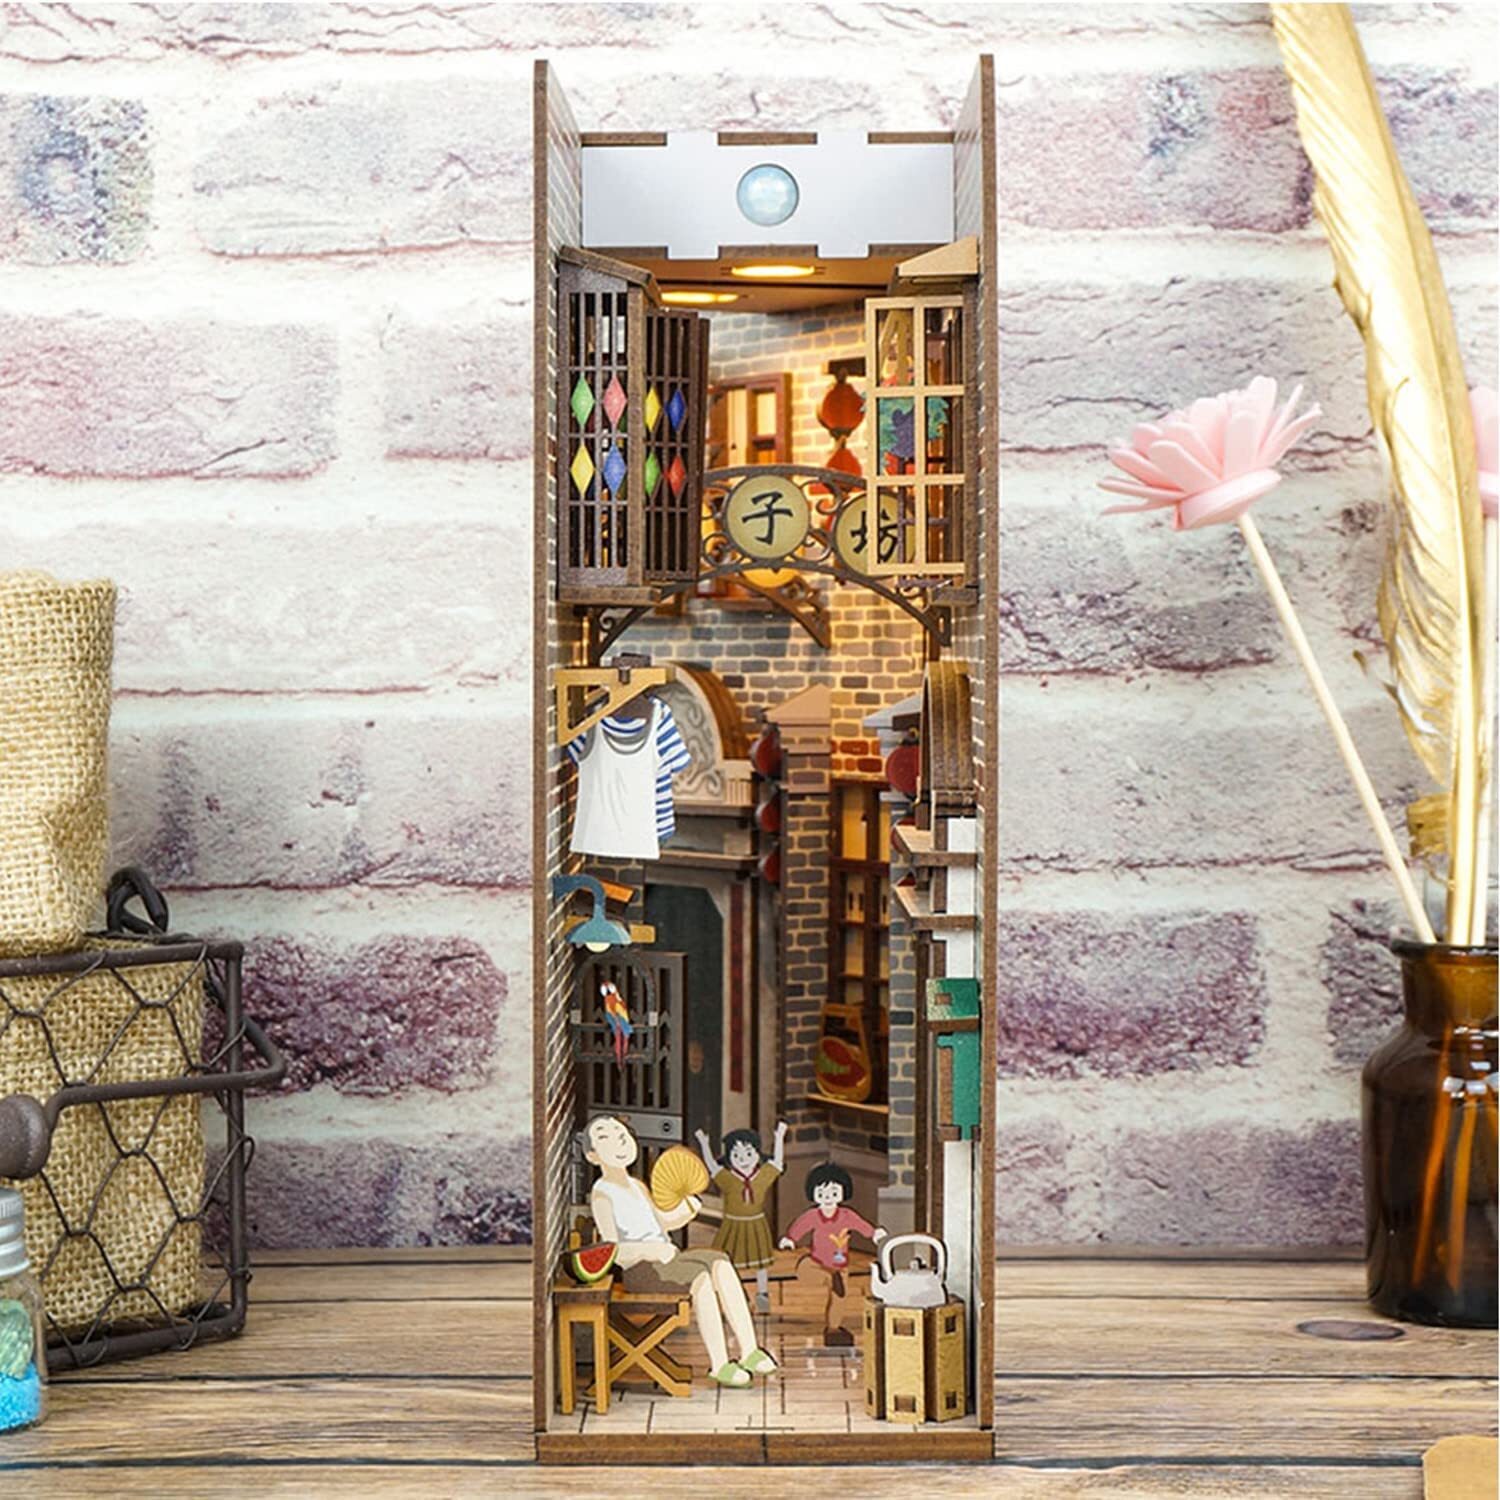 Desmond DIY Book Nook Kit, Miniature Dollhouse Kit 3D Wooden Puzzle with Sensor Light Booknook Bookshelf Insert Diorama Forest Deer Tiny Alley Decor Bookshelf Kits to Build for Kids/Adults